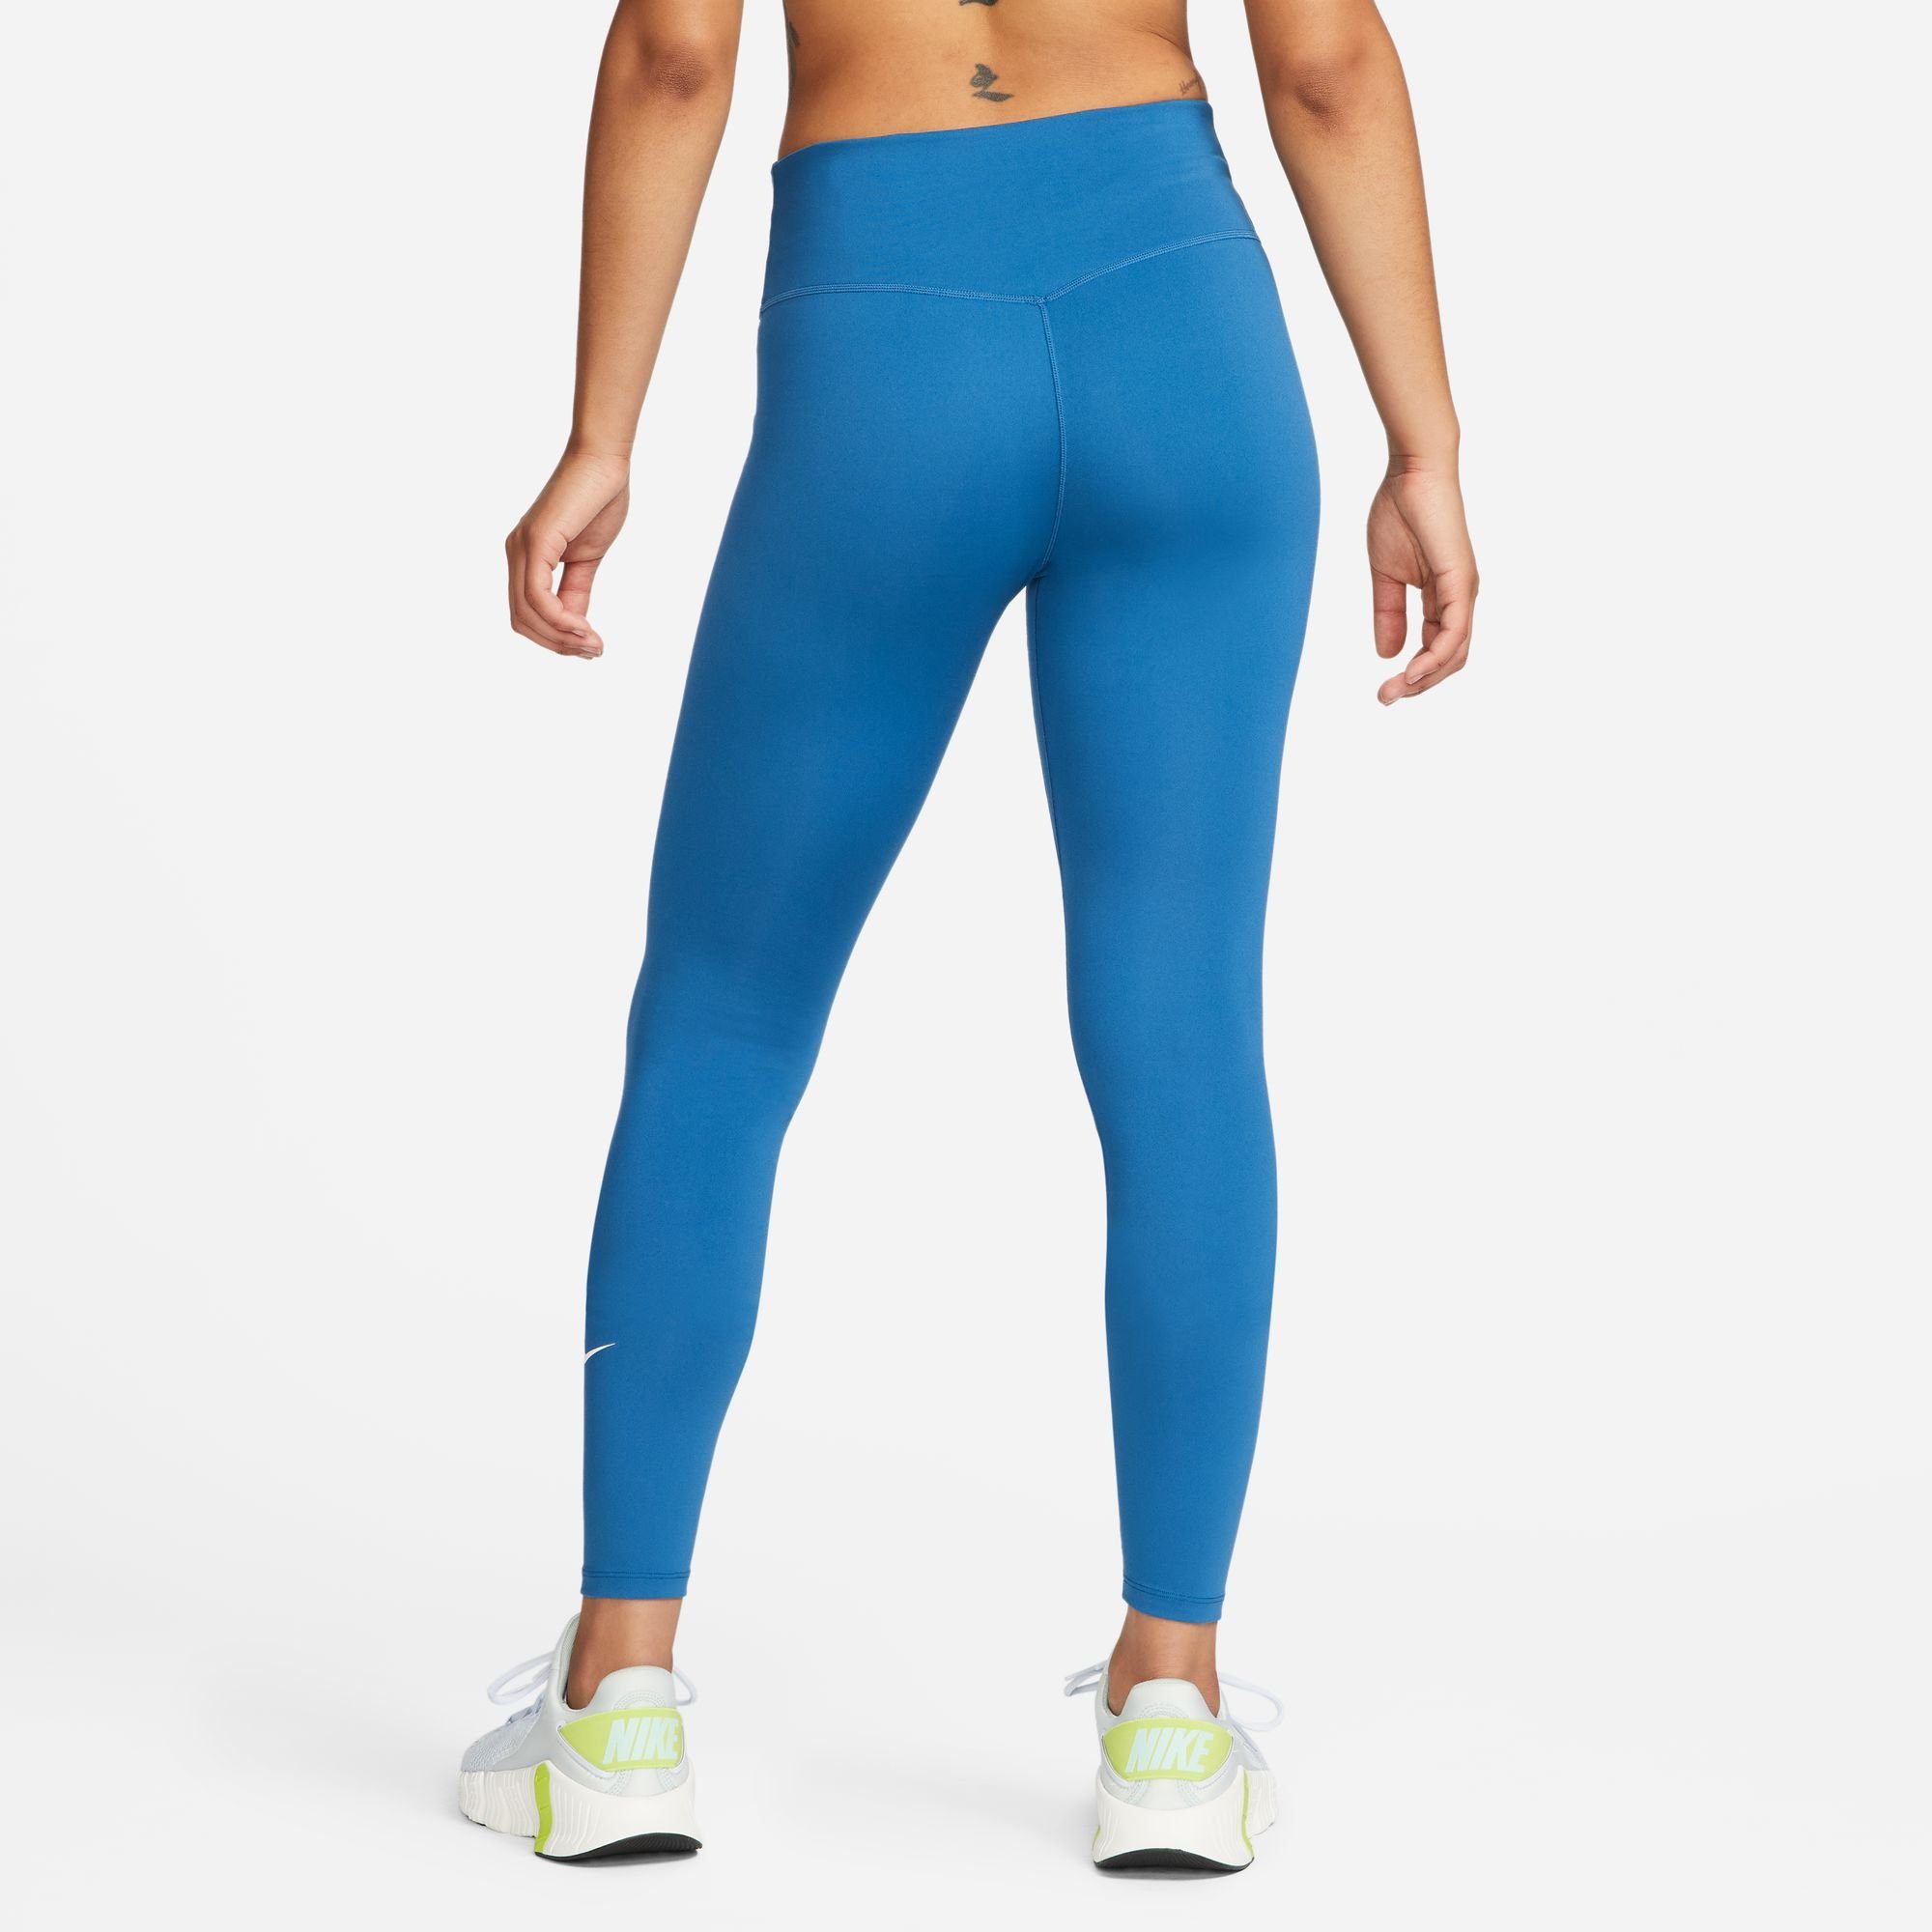 BLUE/WHITE LEGGINGS Trainingstights WOMEN'S Nike MID-RISE ONE INDUSTRIAL